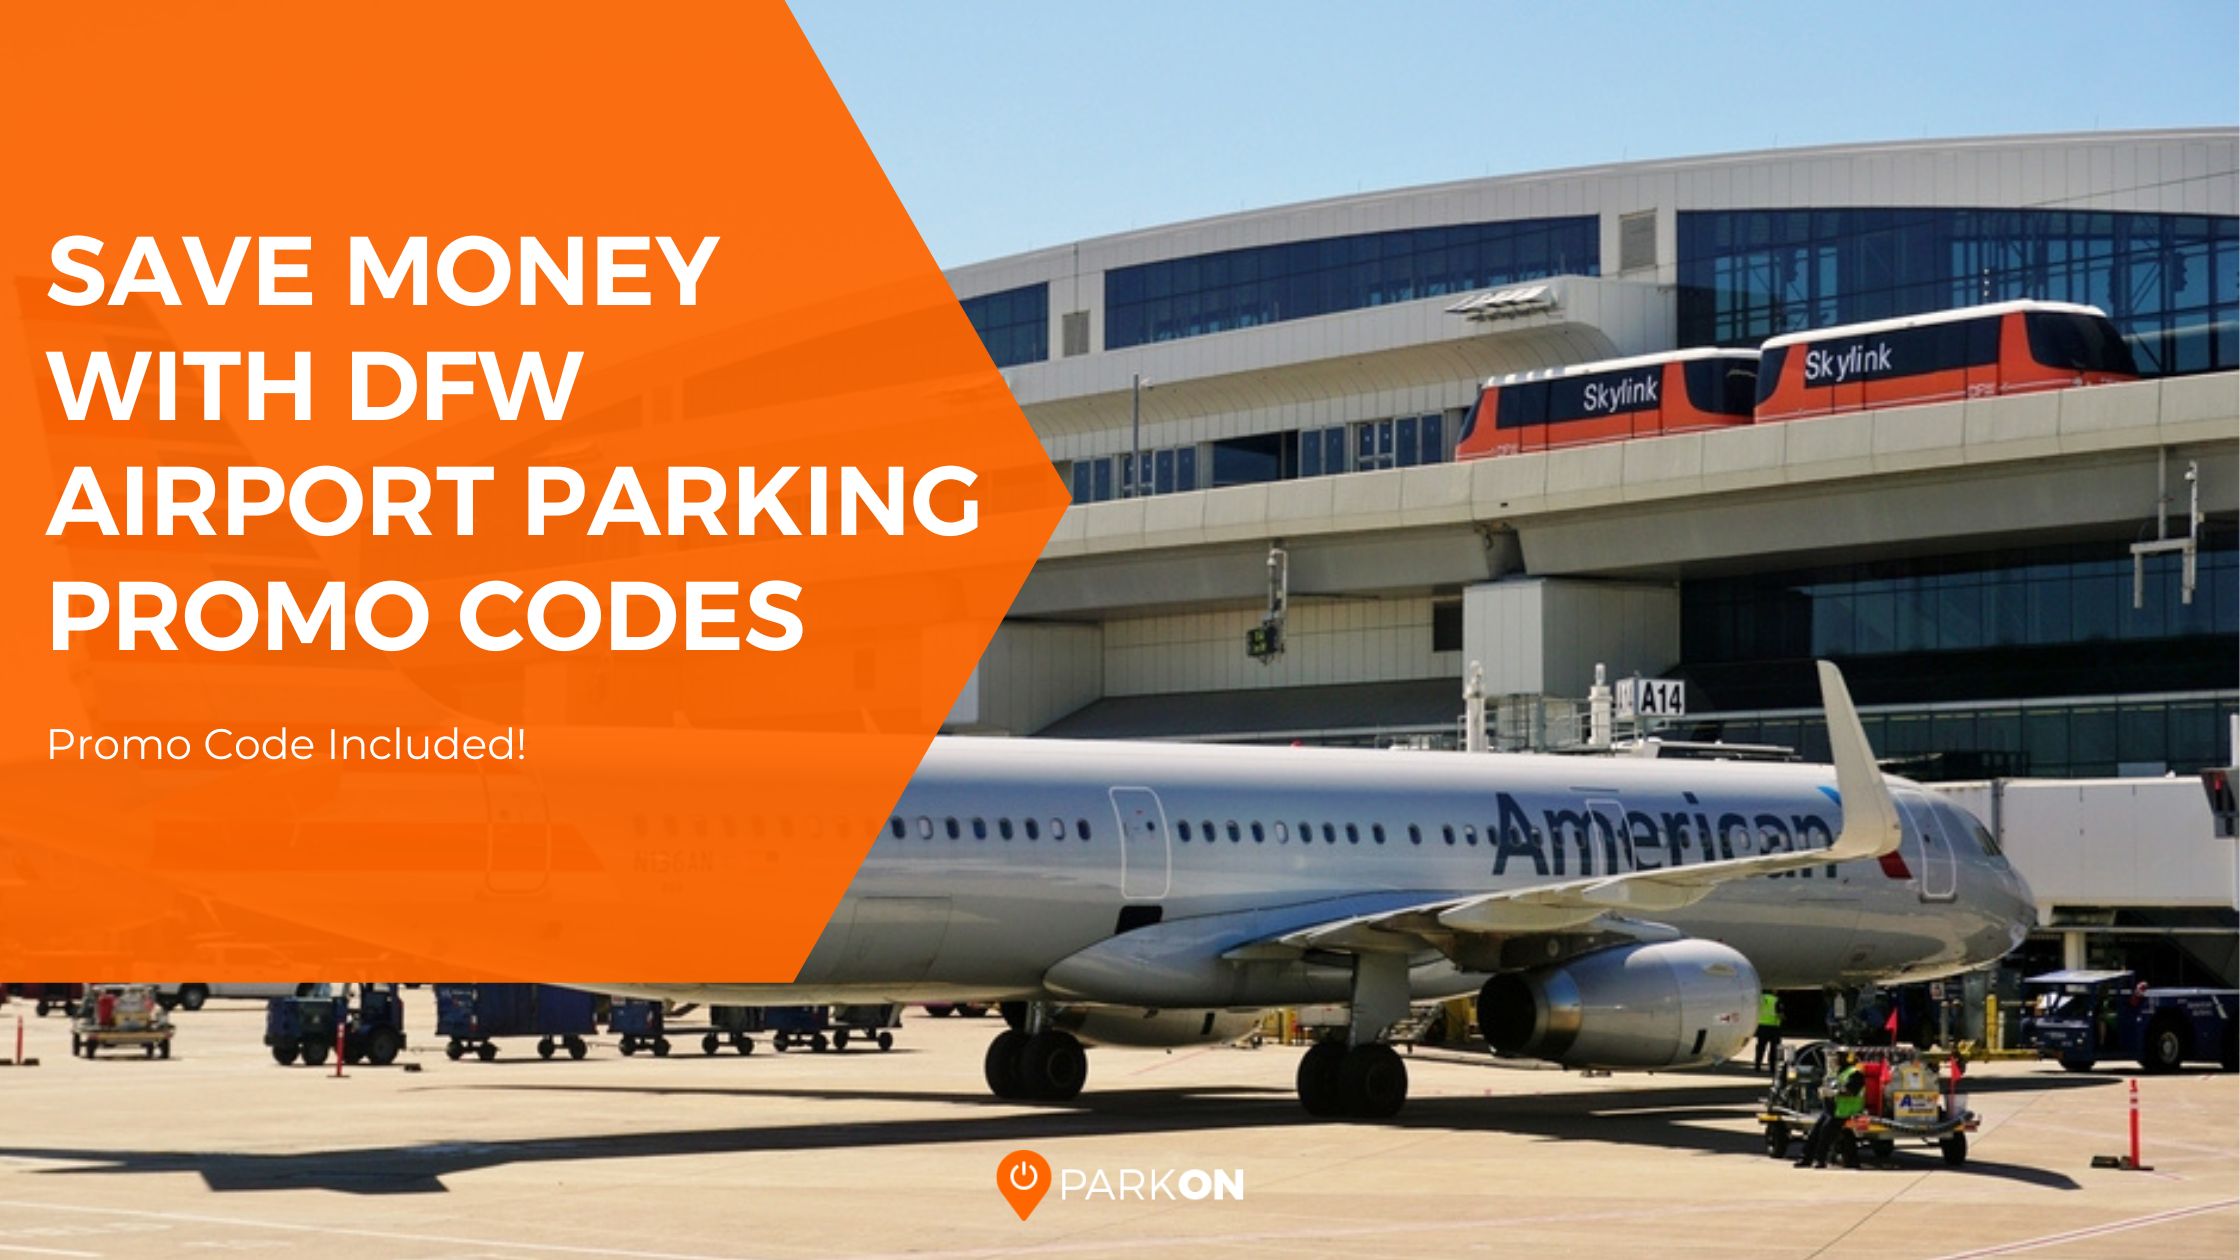  DFW Airport Parking Promo Code